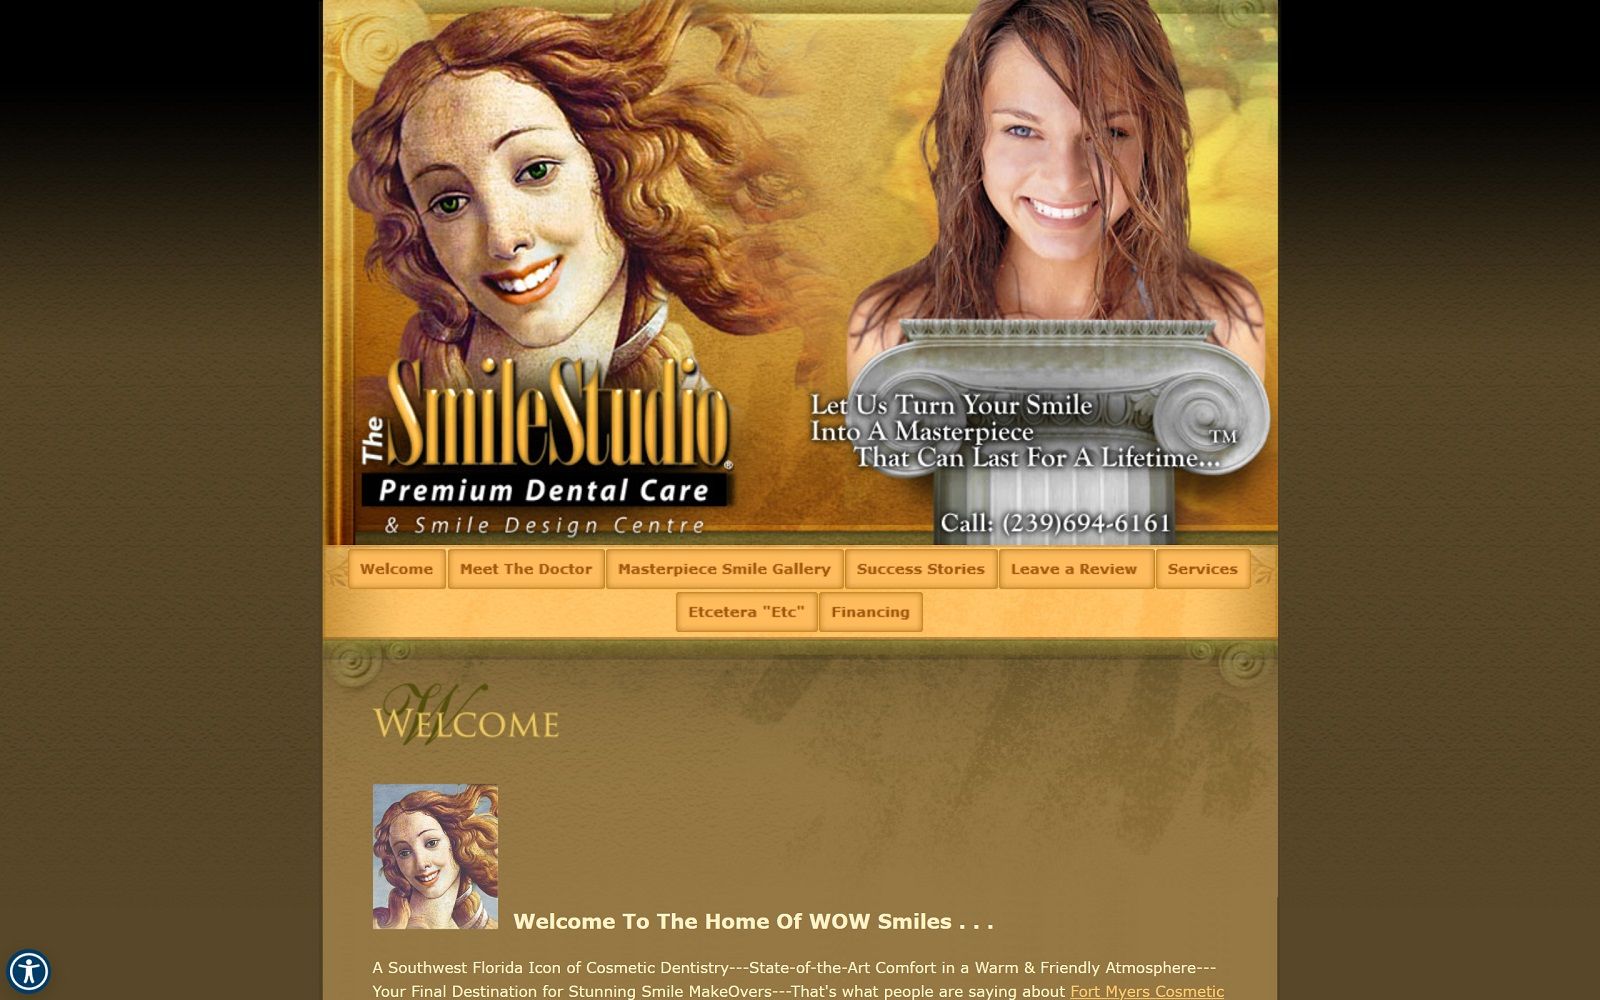 thesmilestudio.com screenshot